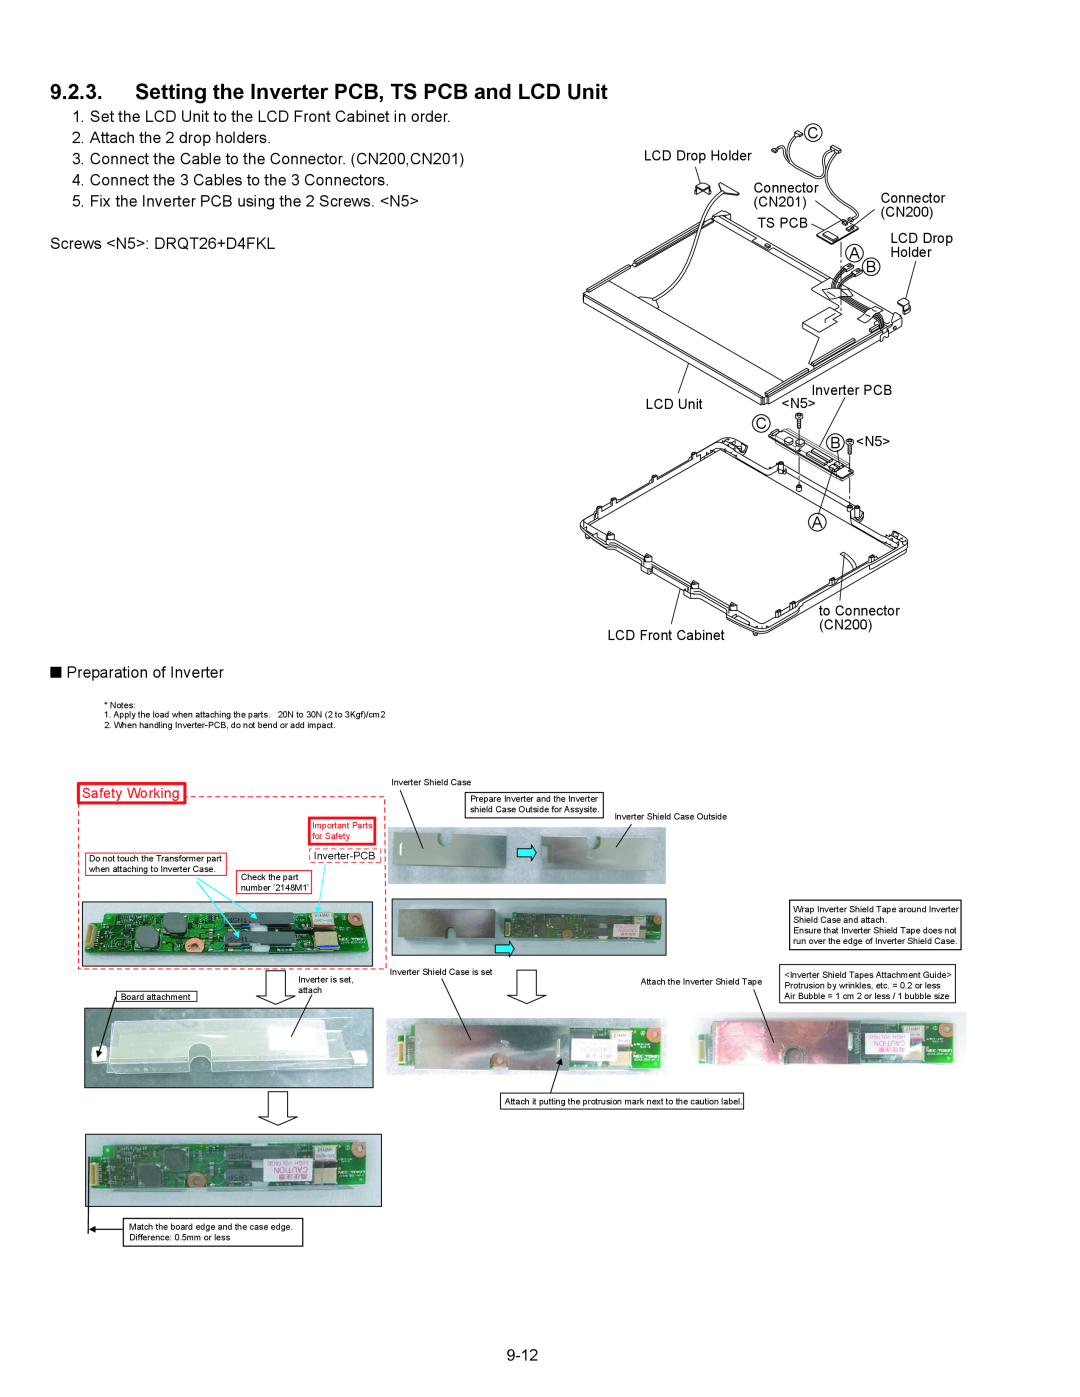 Matsushita CF-30 service manual Setting the Inverter PCB, TS PCB and LCD Unit, Inverter-PCB 